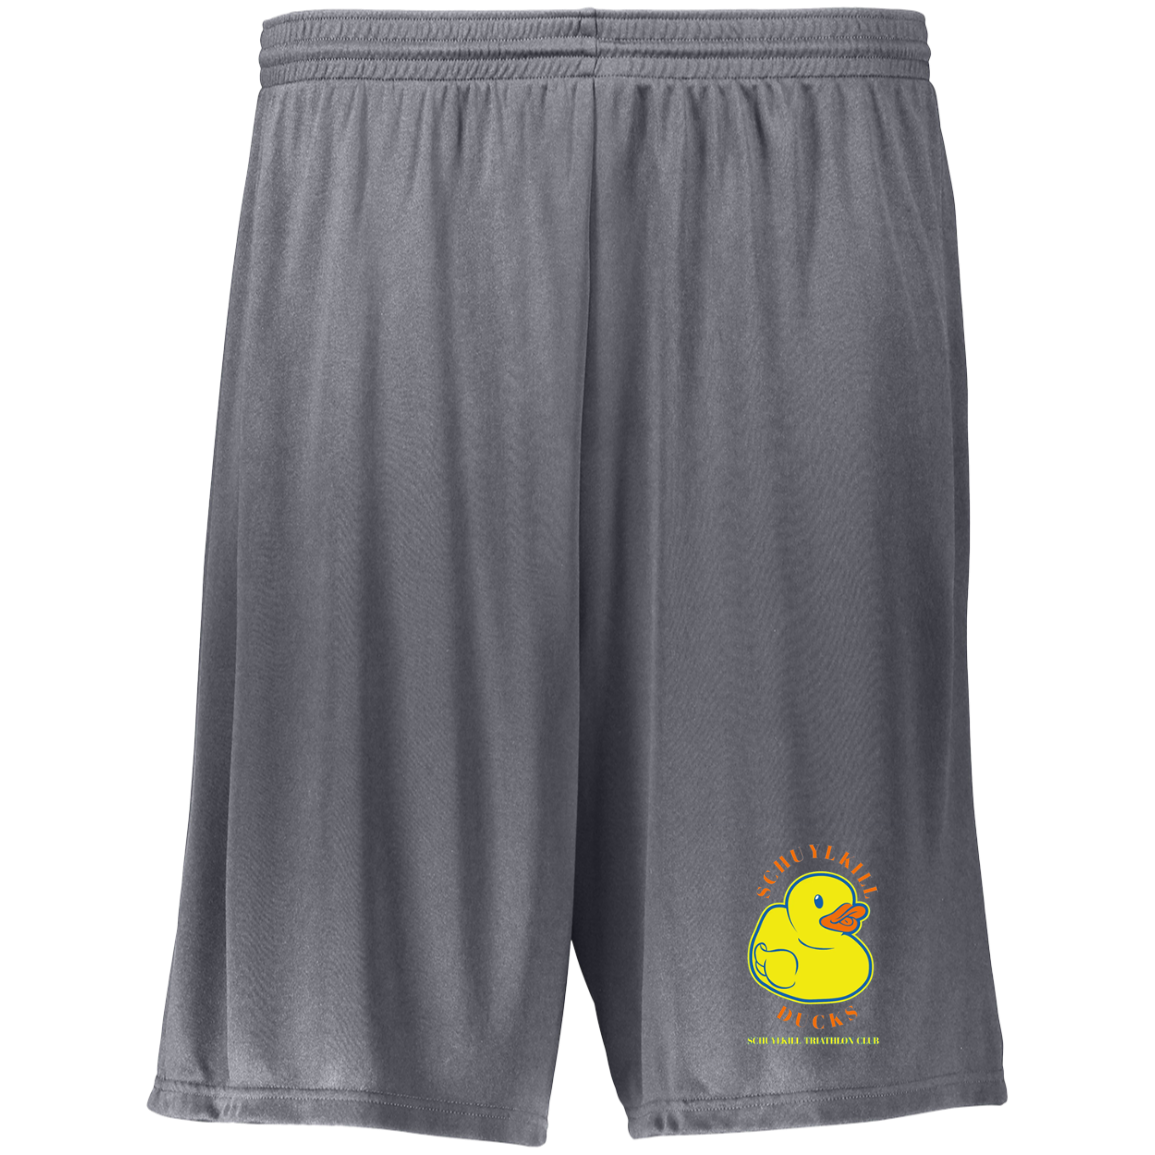 Ducks TeamStore Men's Moisture-Wicking 9 inch Shorts